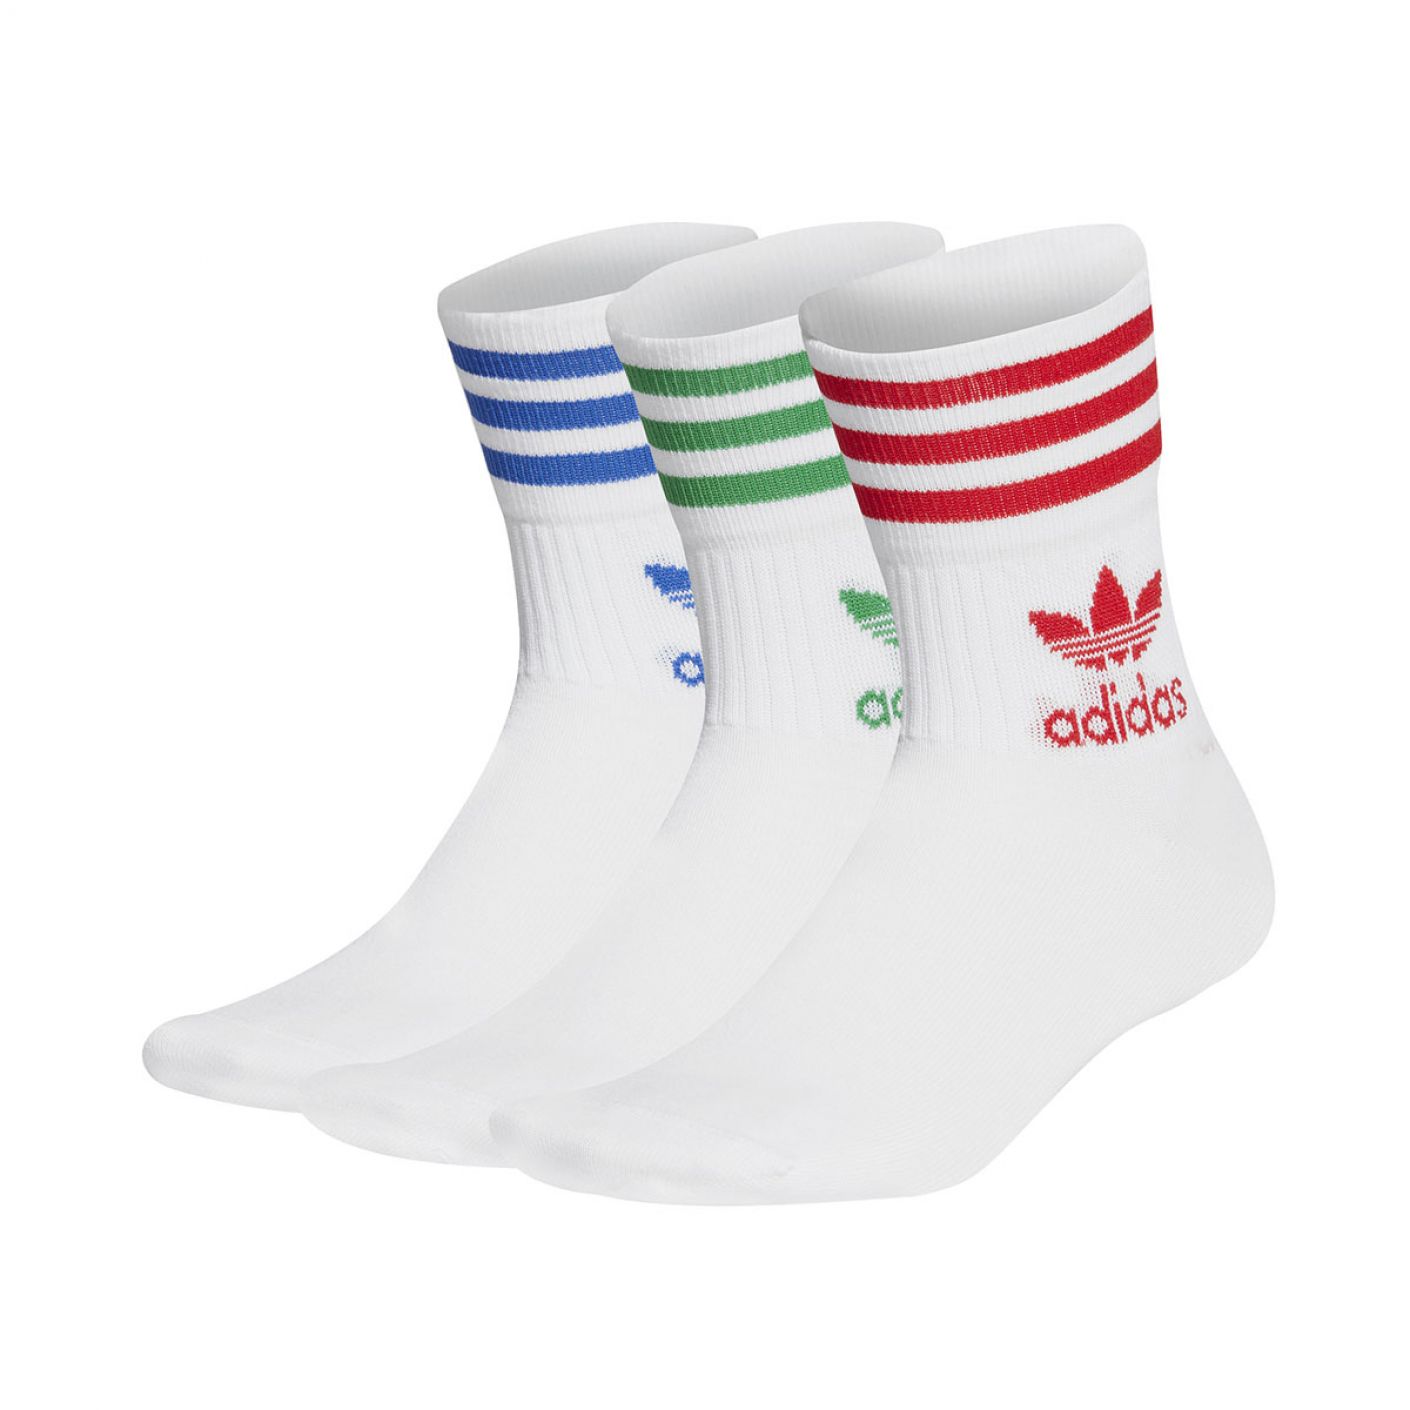 Adidas Socks Mid Cut White Scarlet